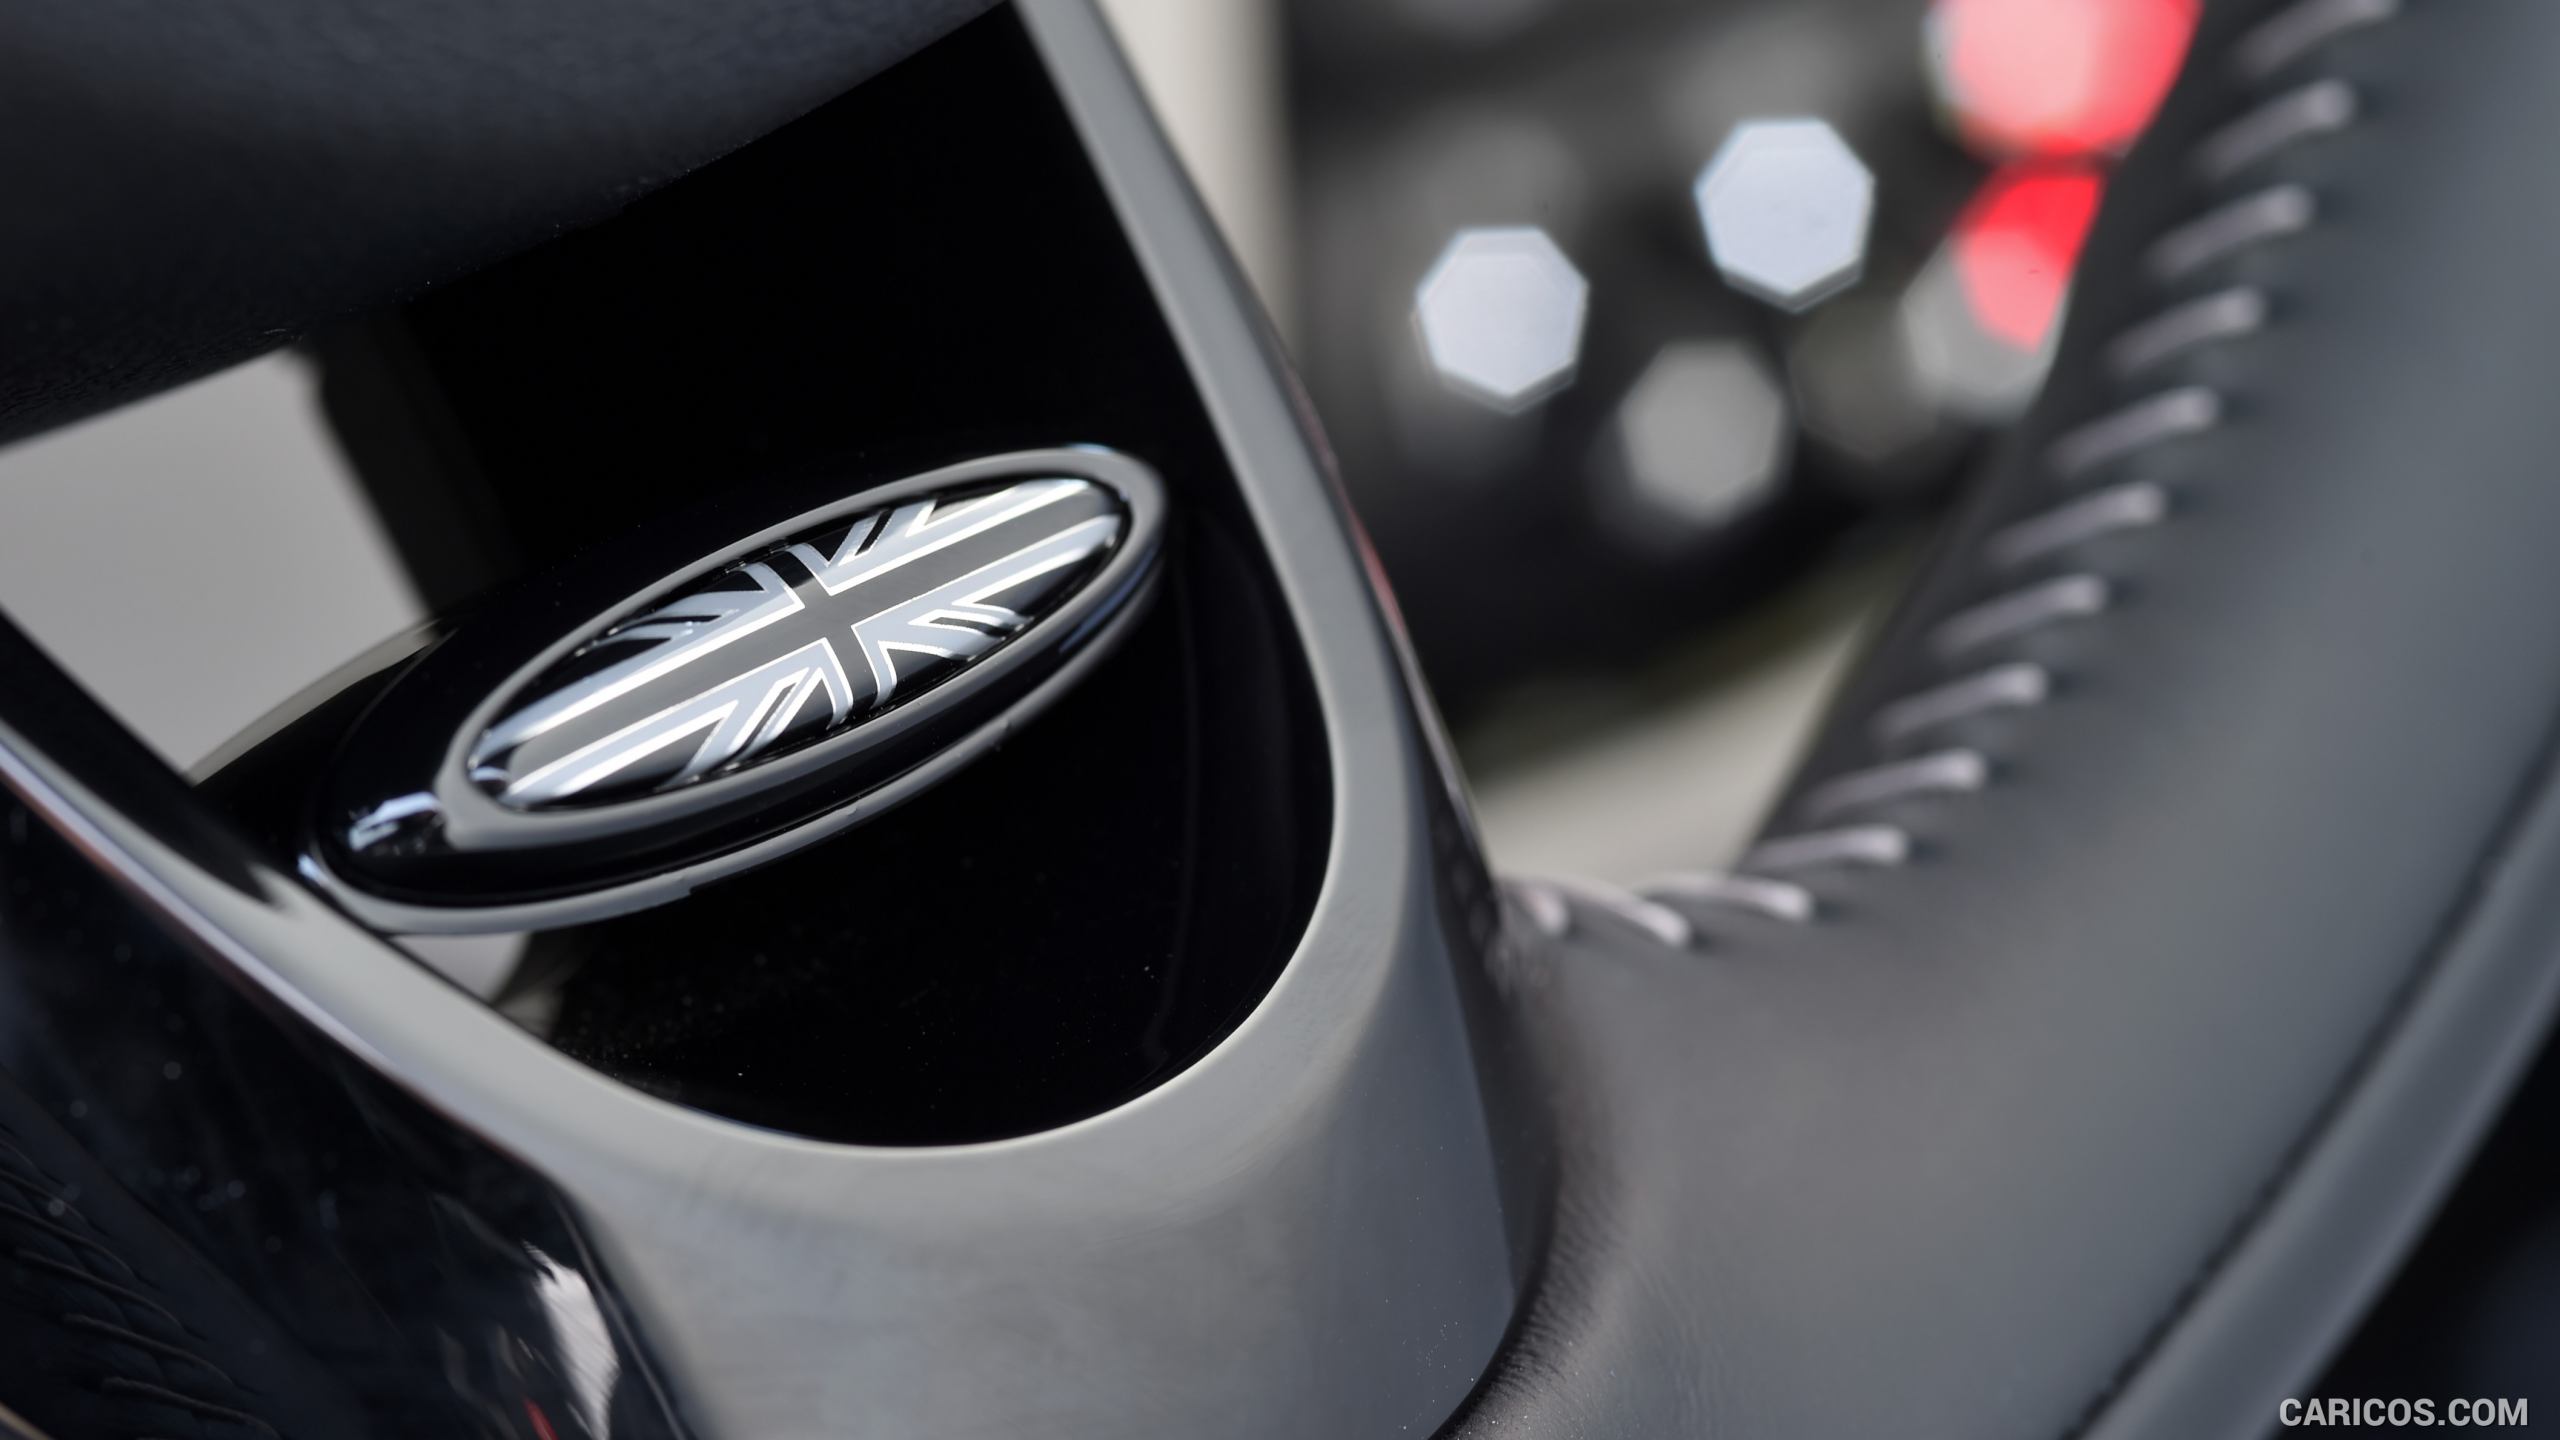 2016 MINI Cooper S Clubman in Metallic Melting Silver - Interior, Detail, #237 of 380